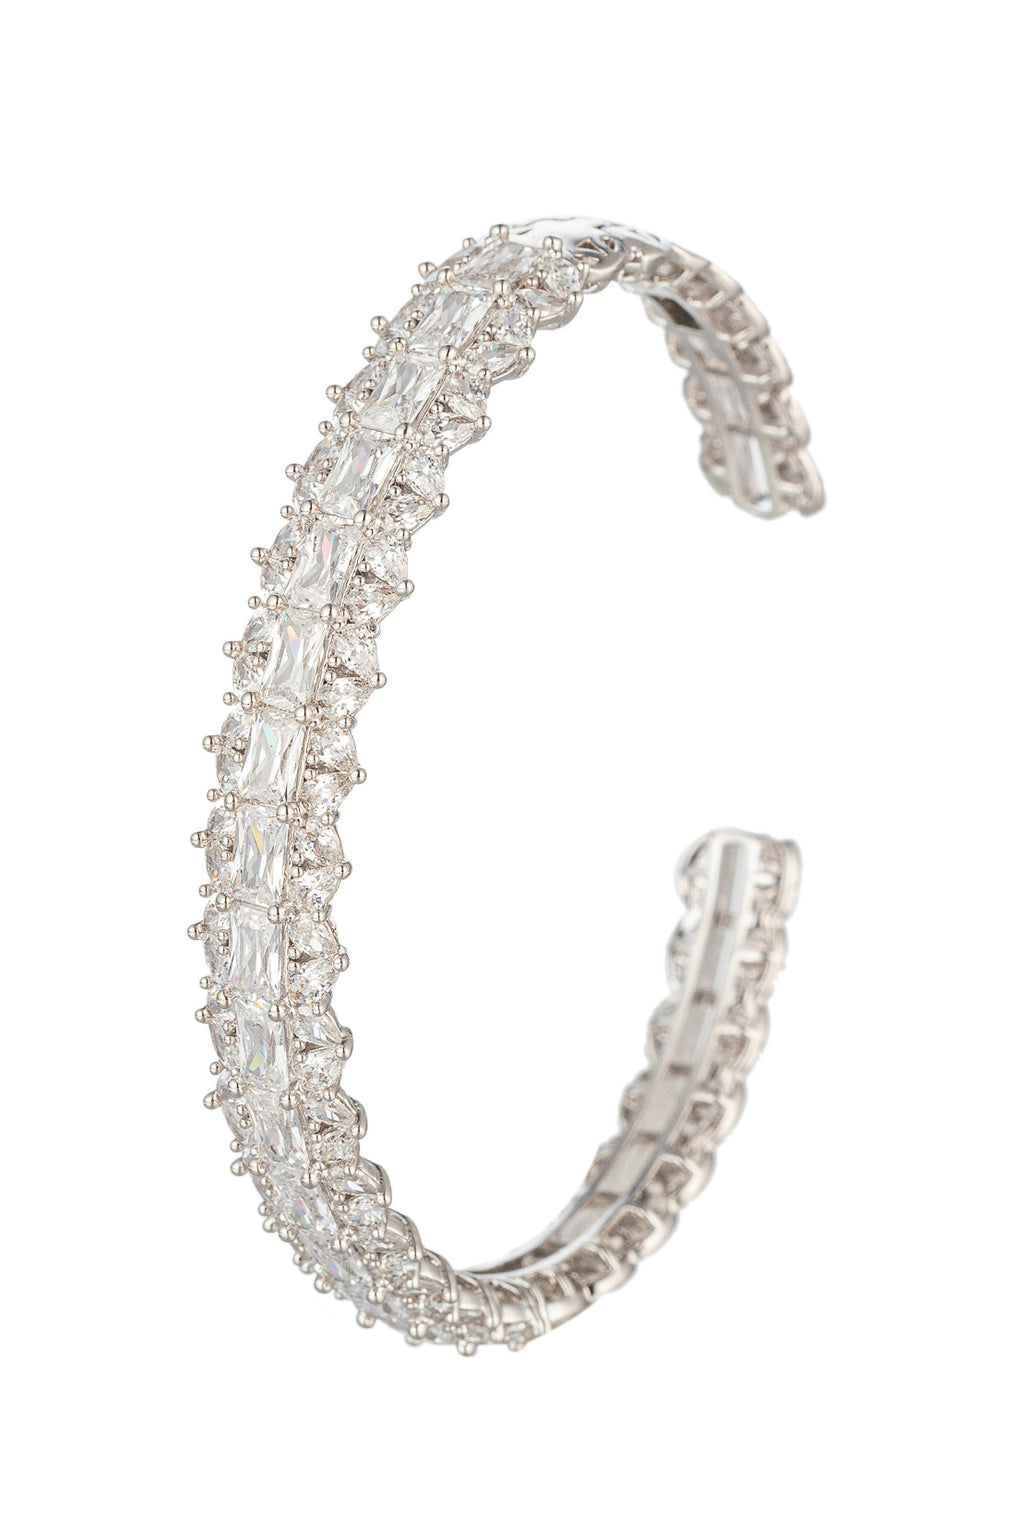 Silver tone titanium cuff bracelet studded with CZ crystals.